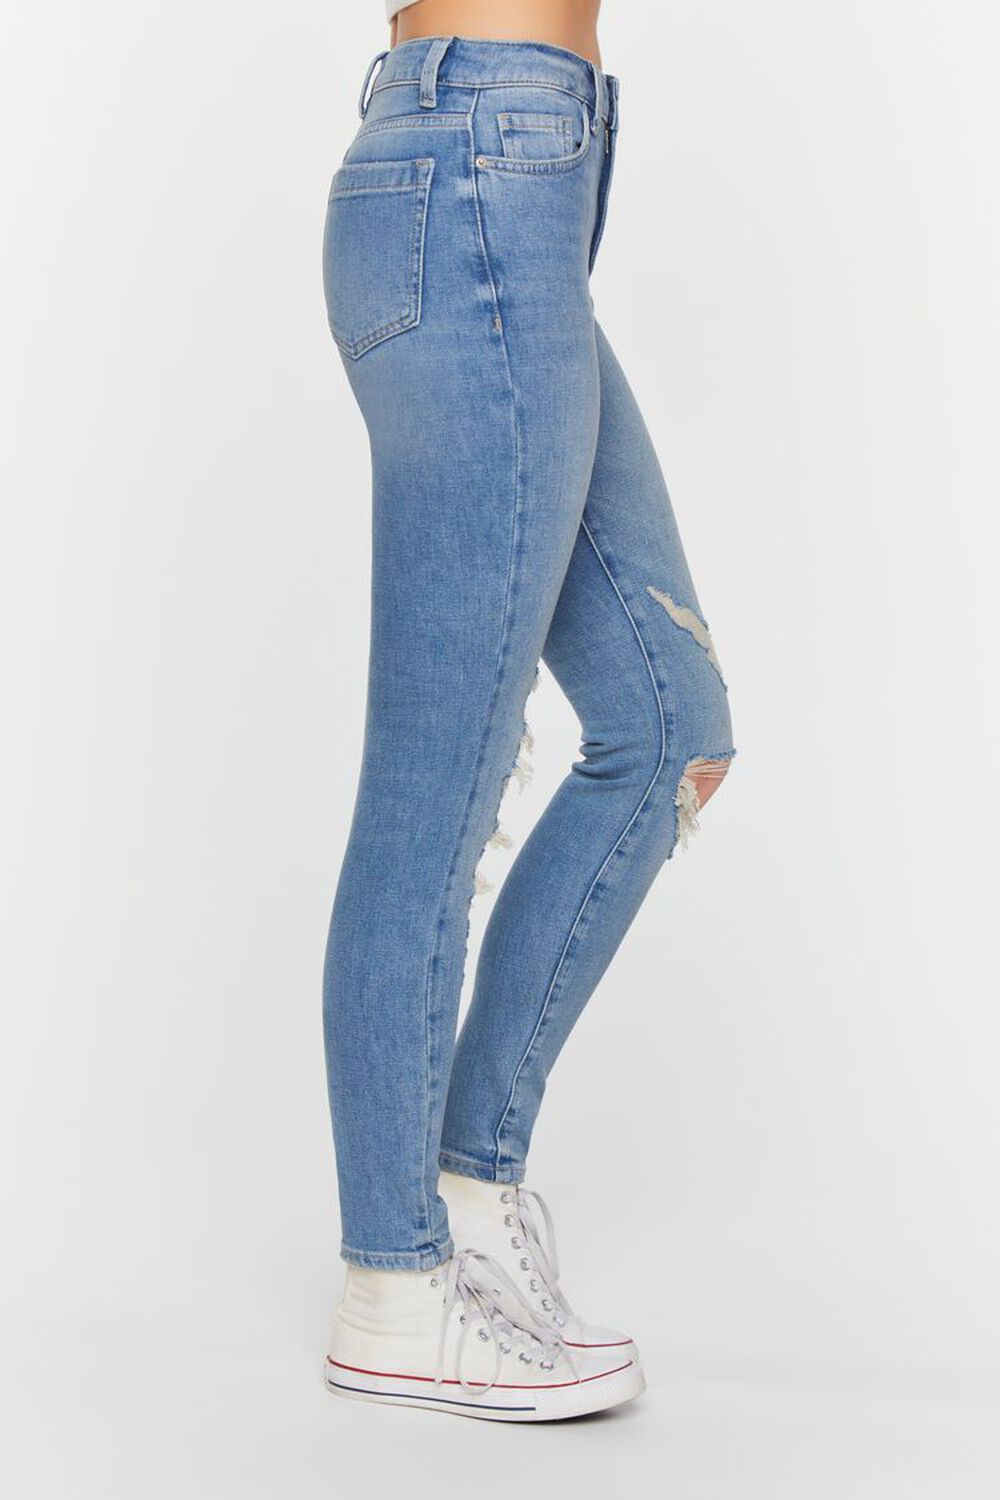 MEDIUM DENIM Hemp 10% Skinny Jeans, image 2